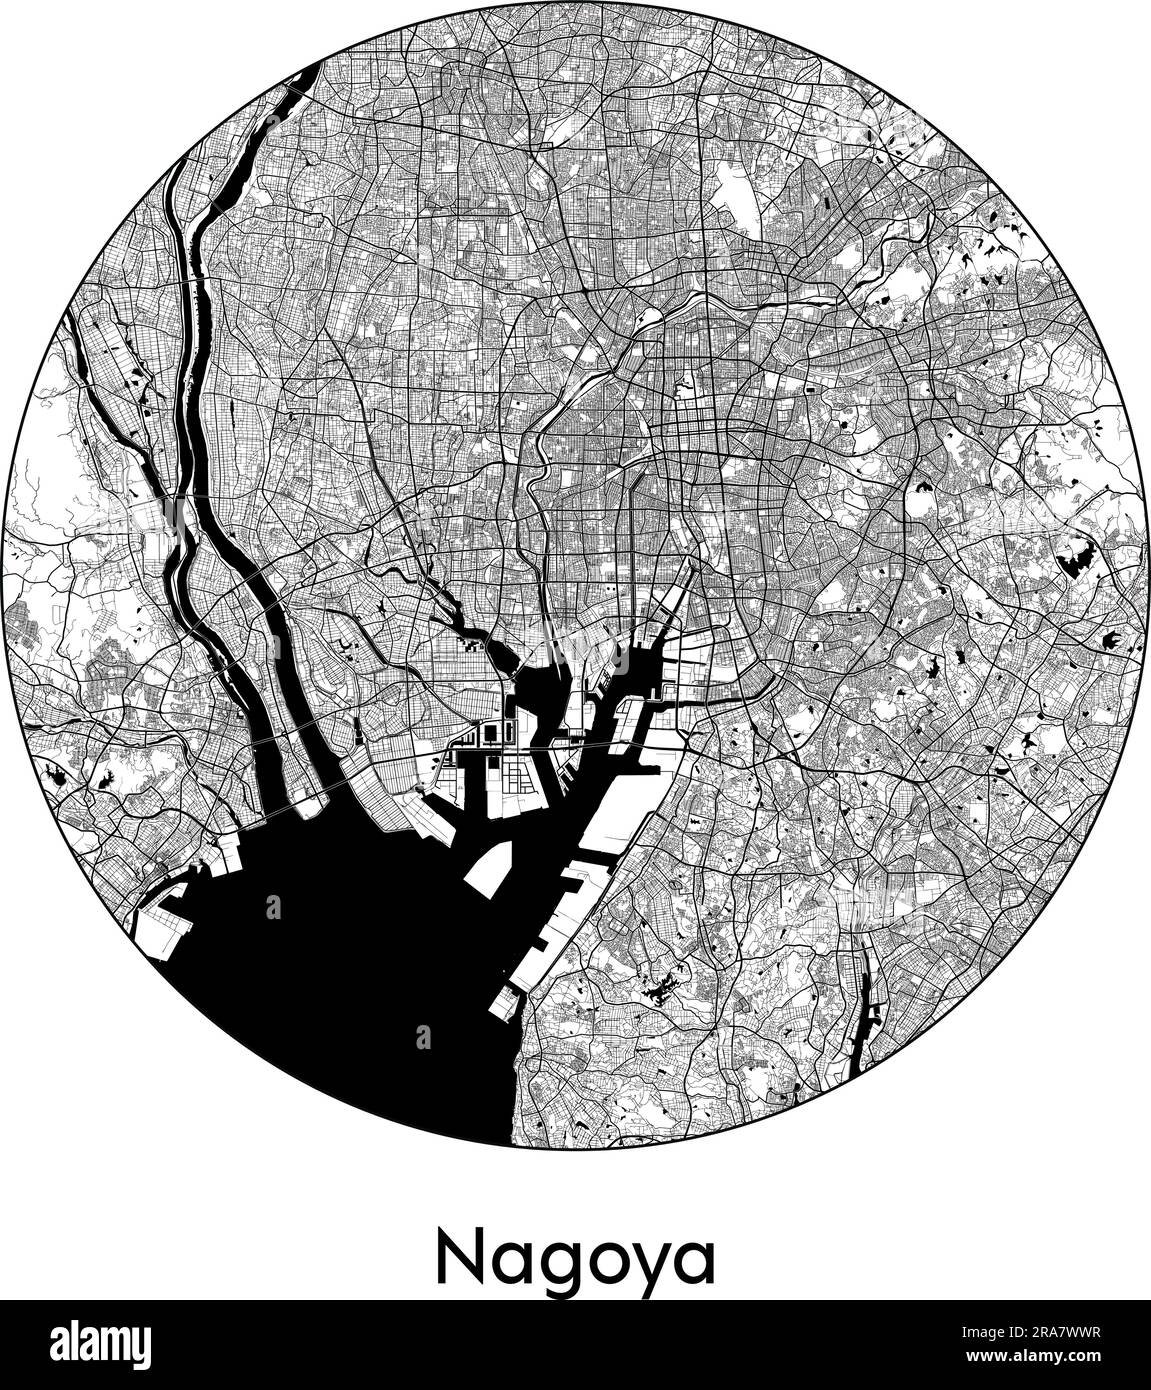 Stadtplan Nagoya Japan Asien Vektordarstellung schwarz weiß Stock Vektor